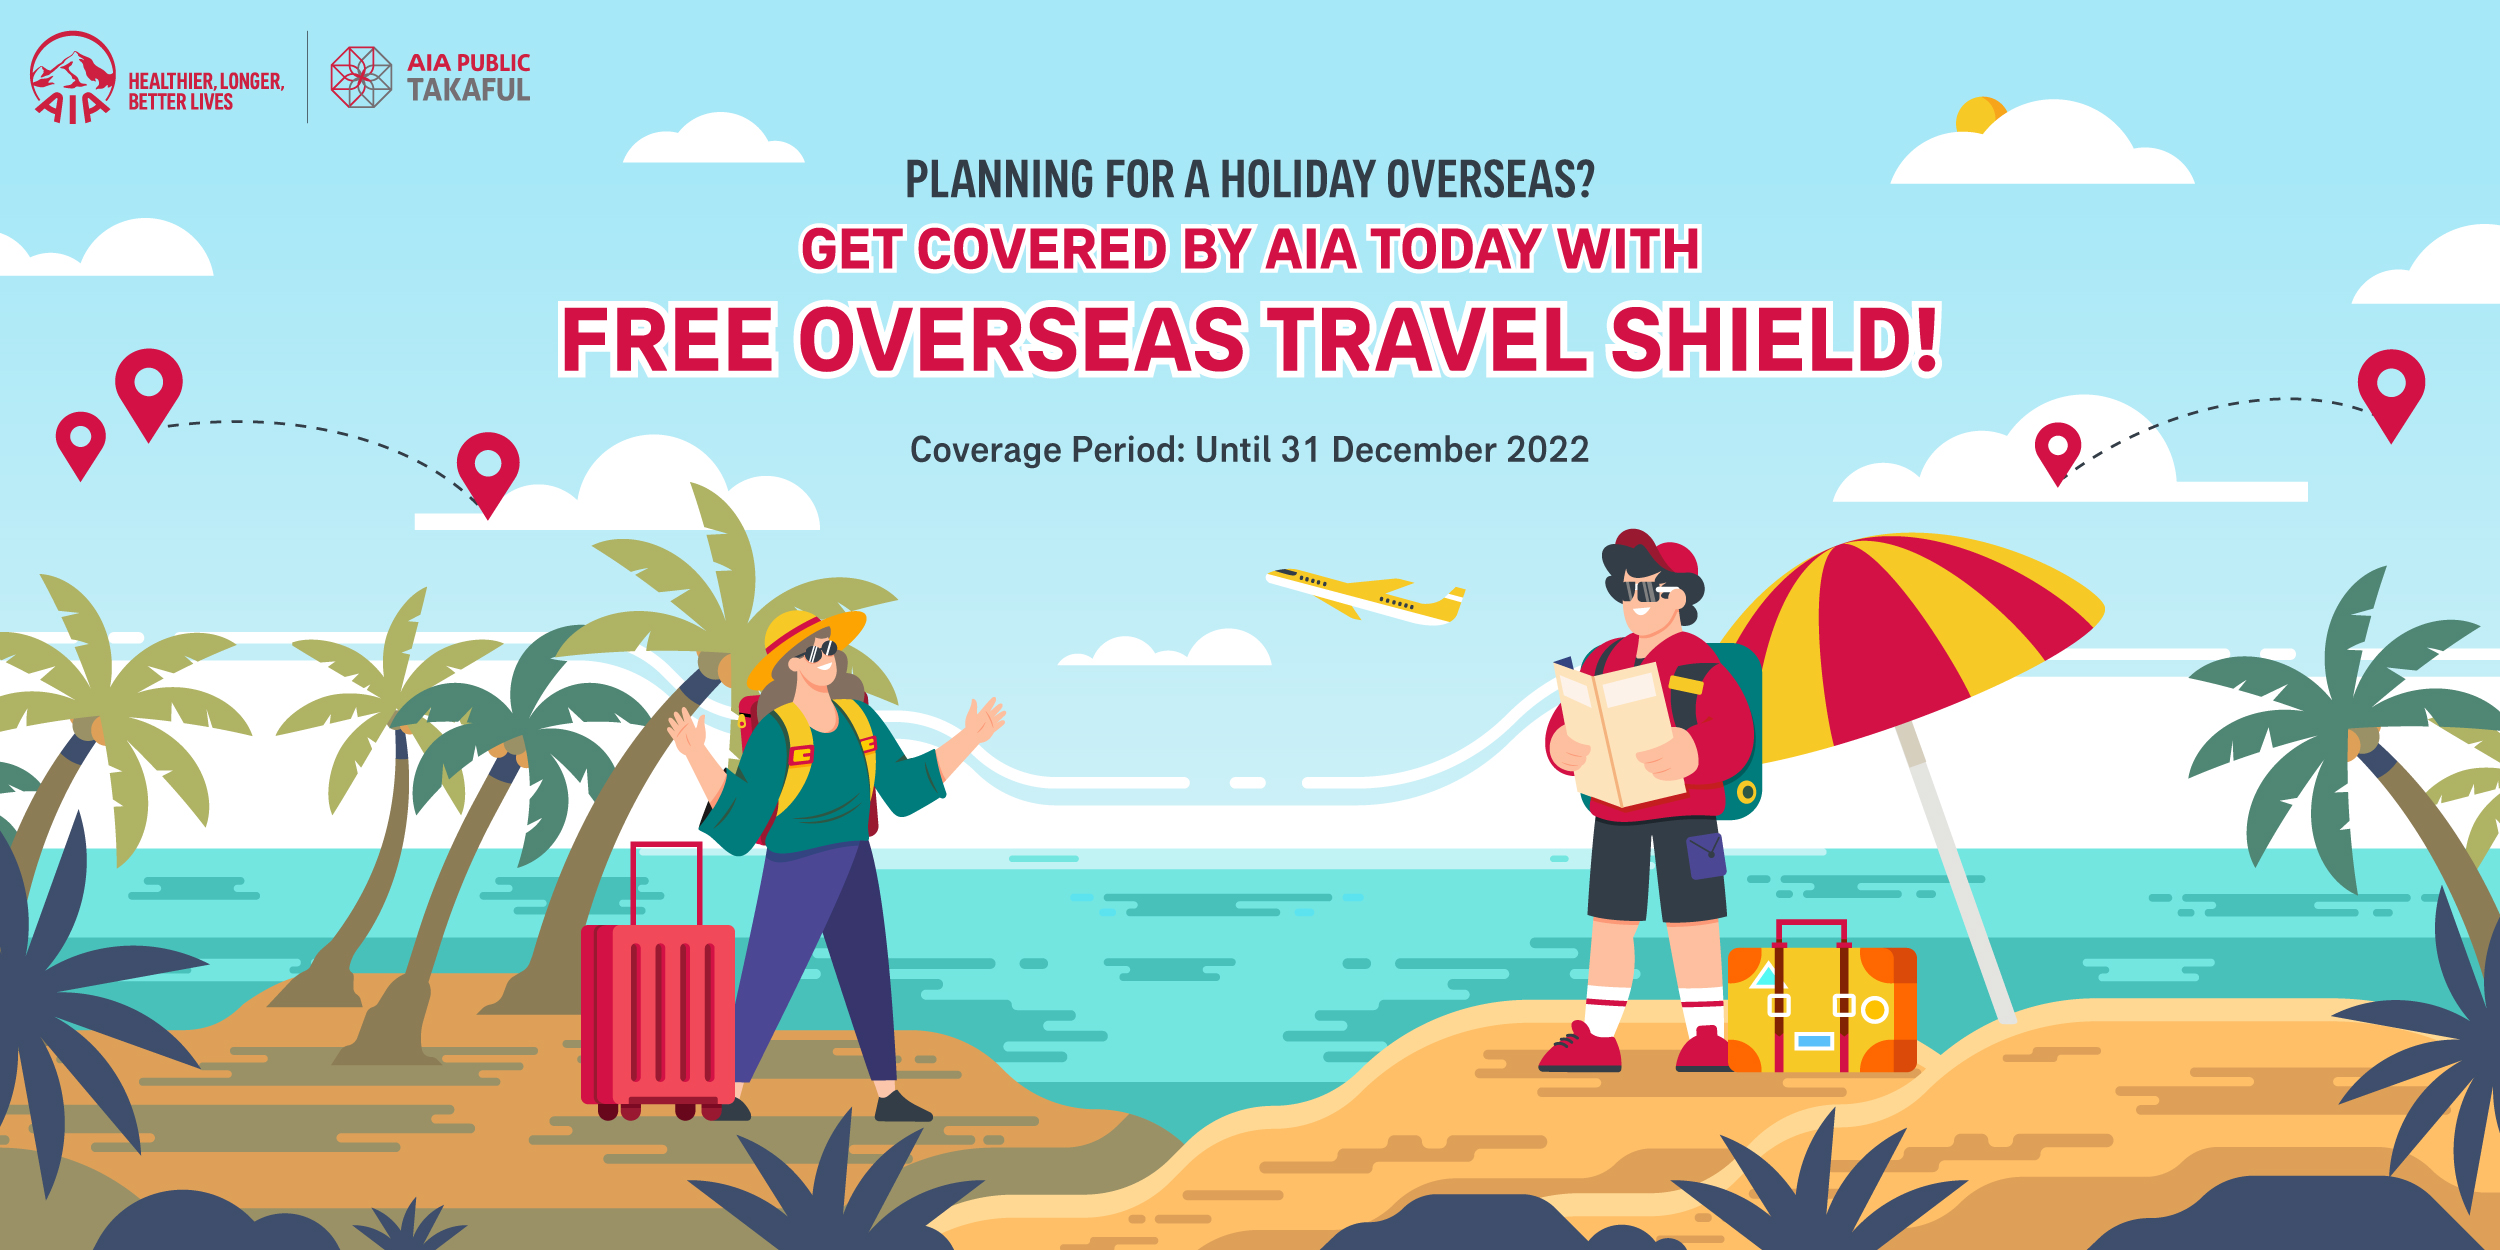 Free overseas travel shield